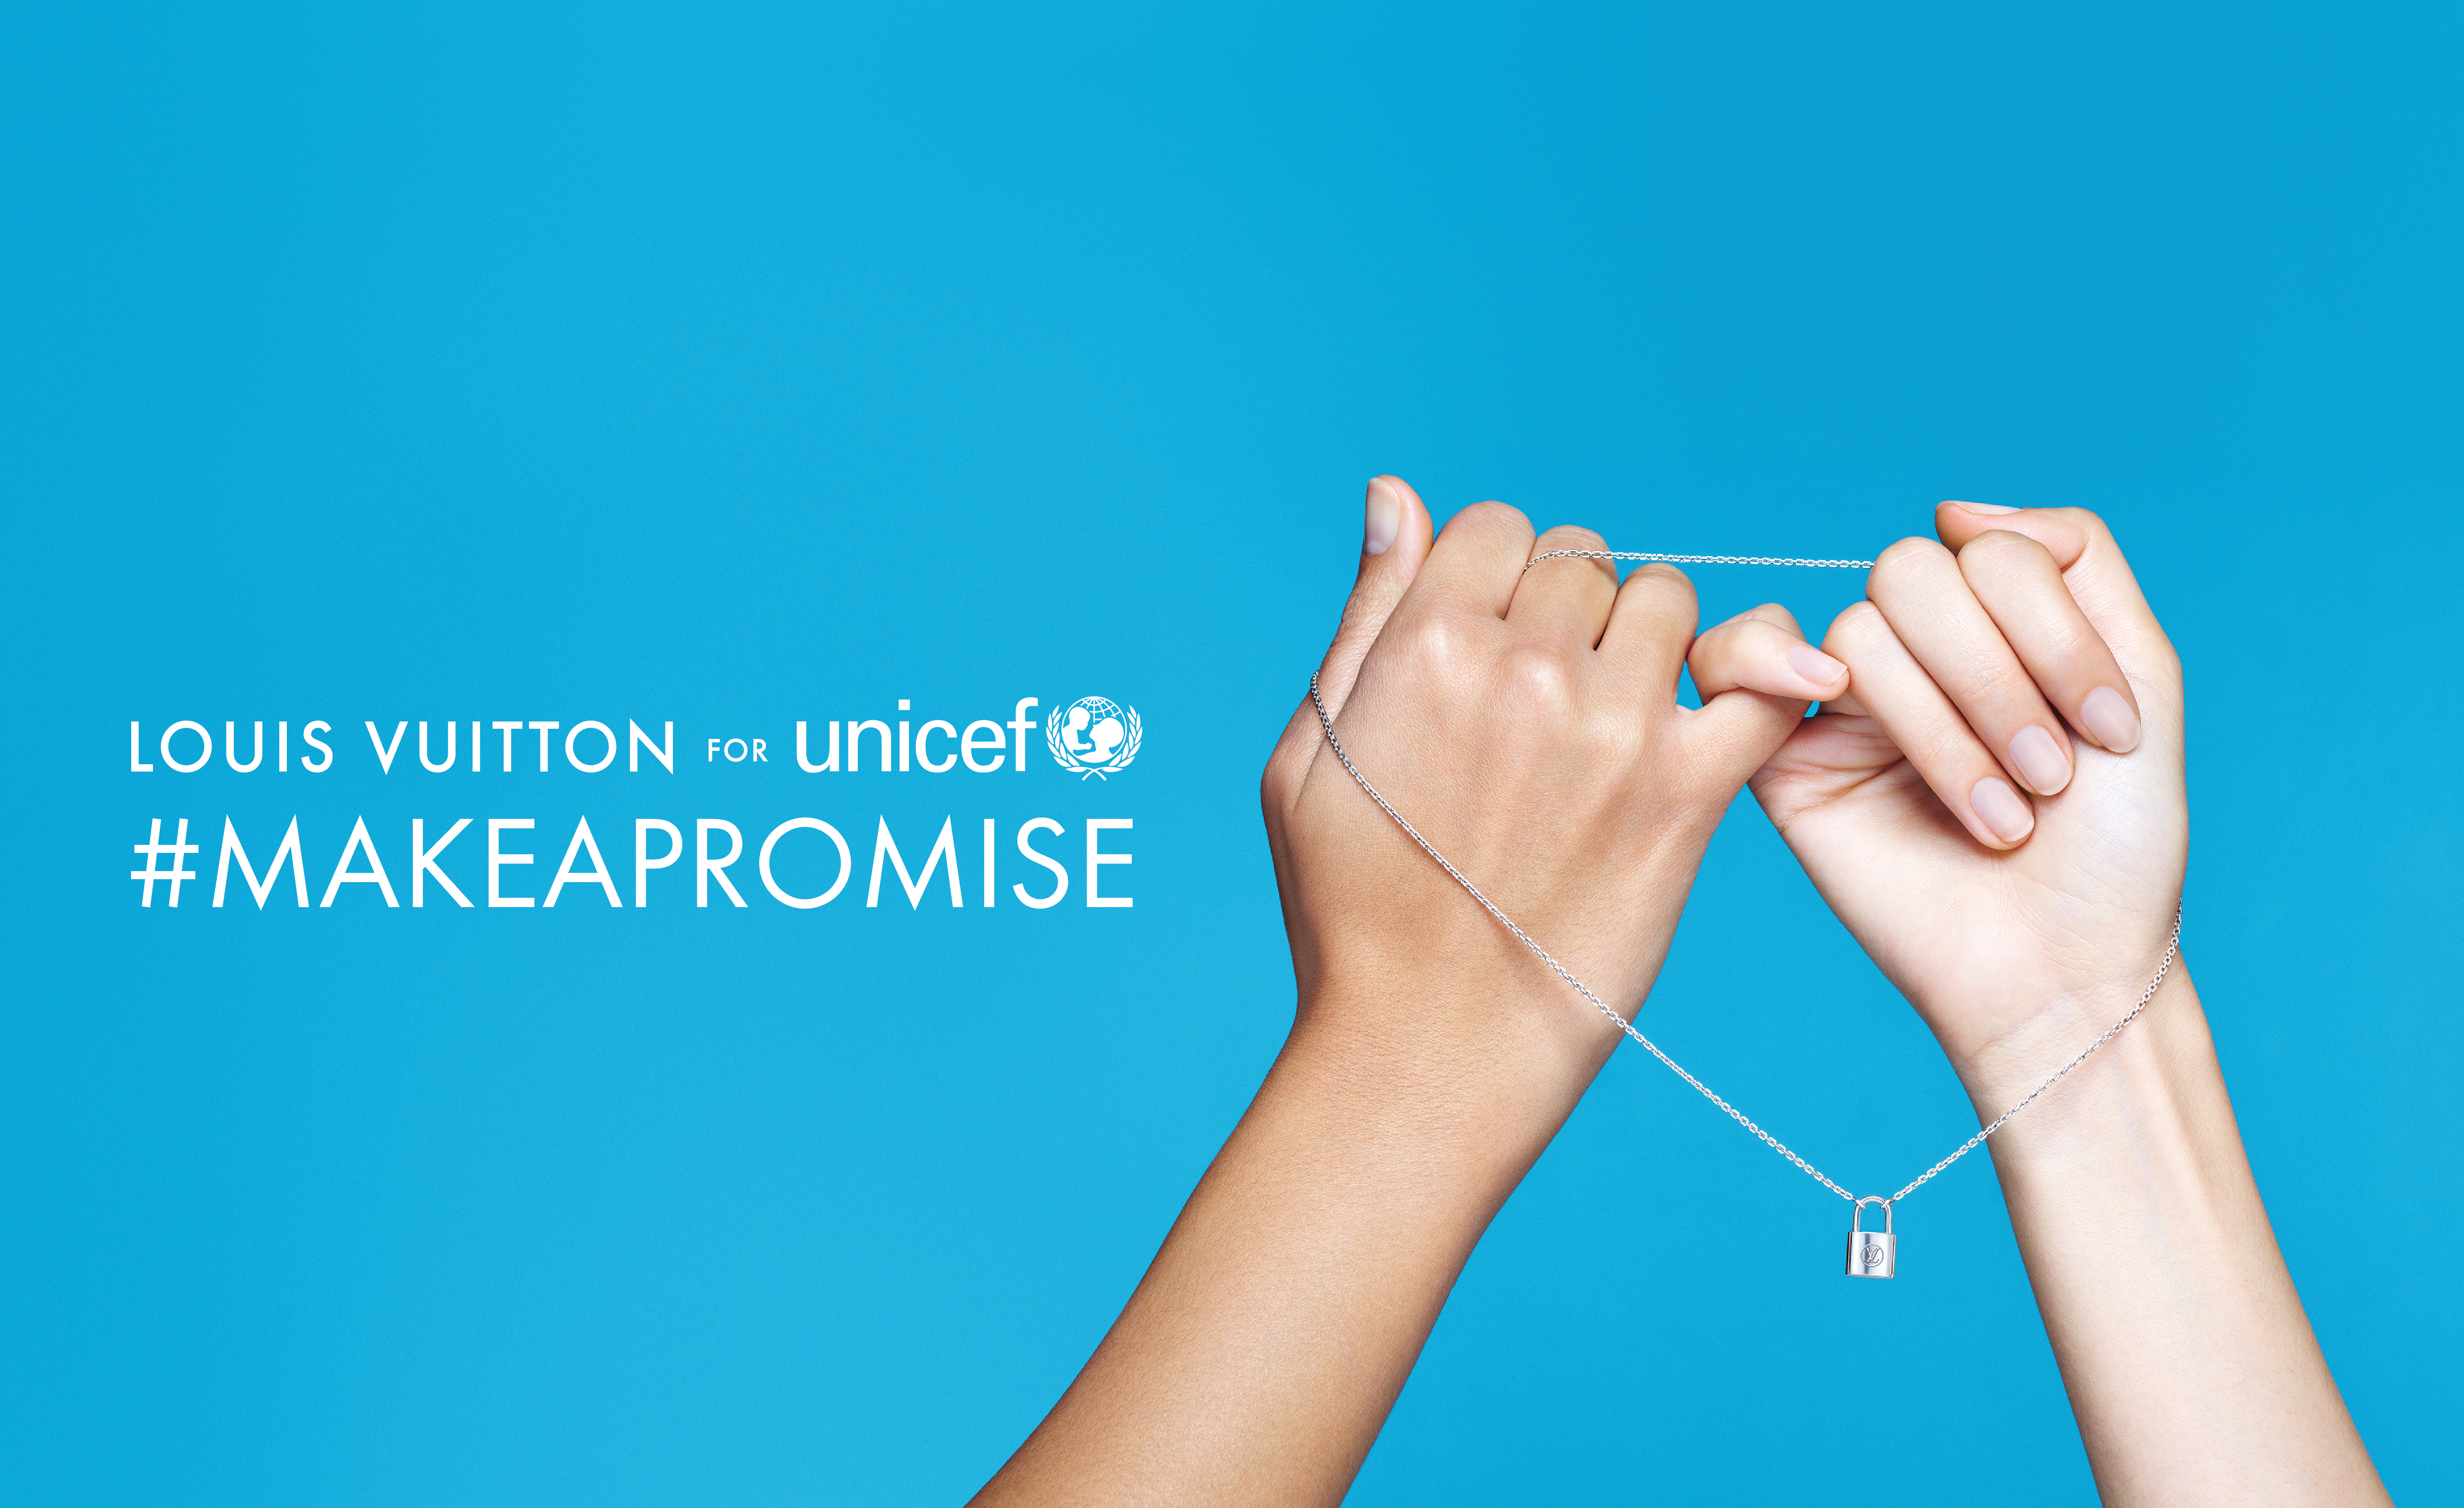 LOUIS VUITTON FOR UNICEF: #MAKEAPROMISE